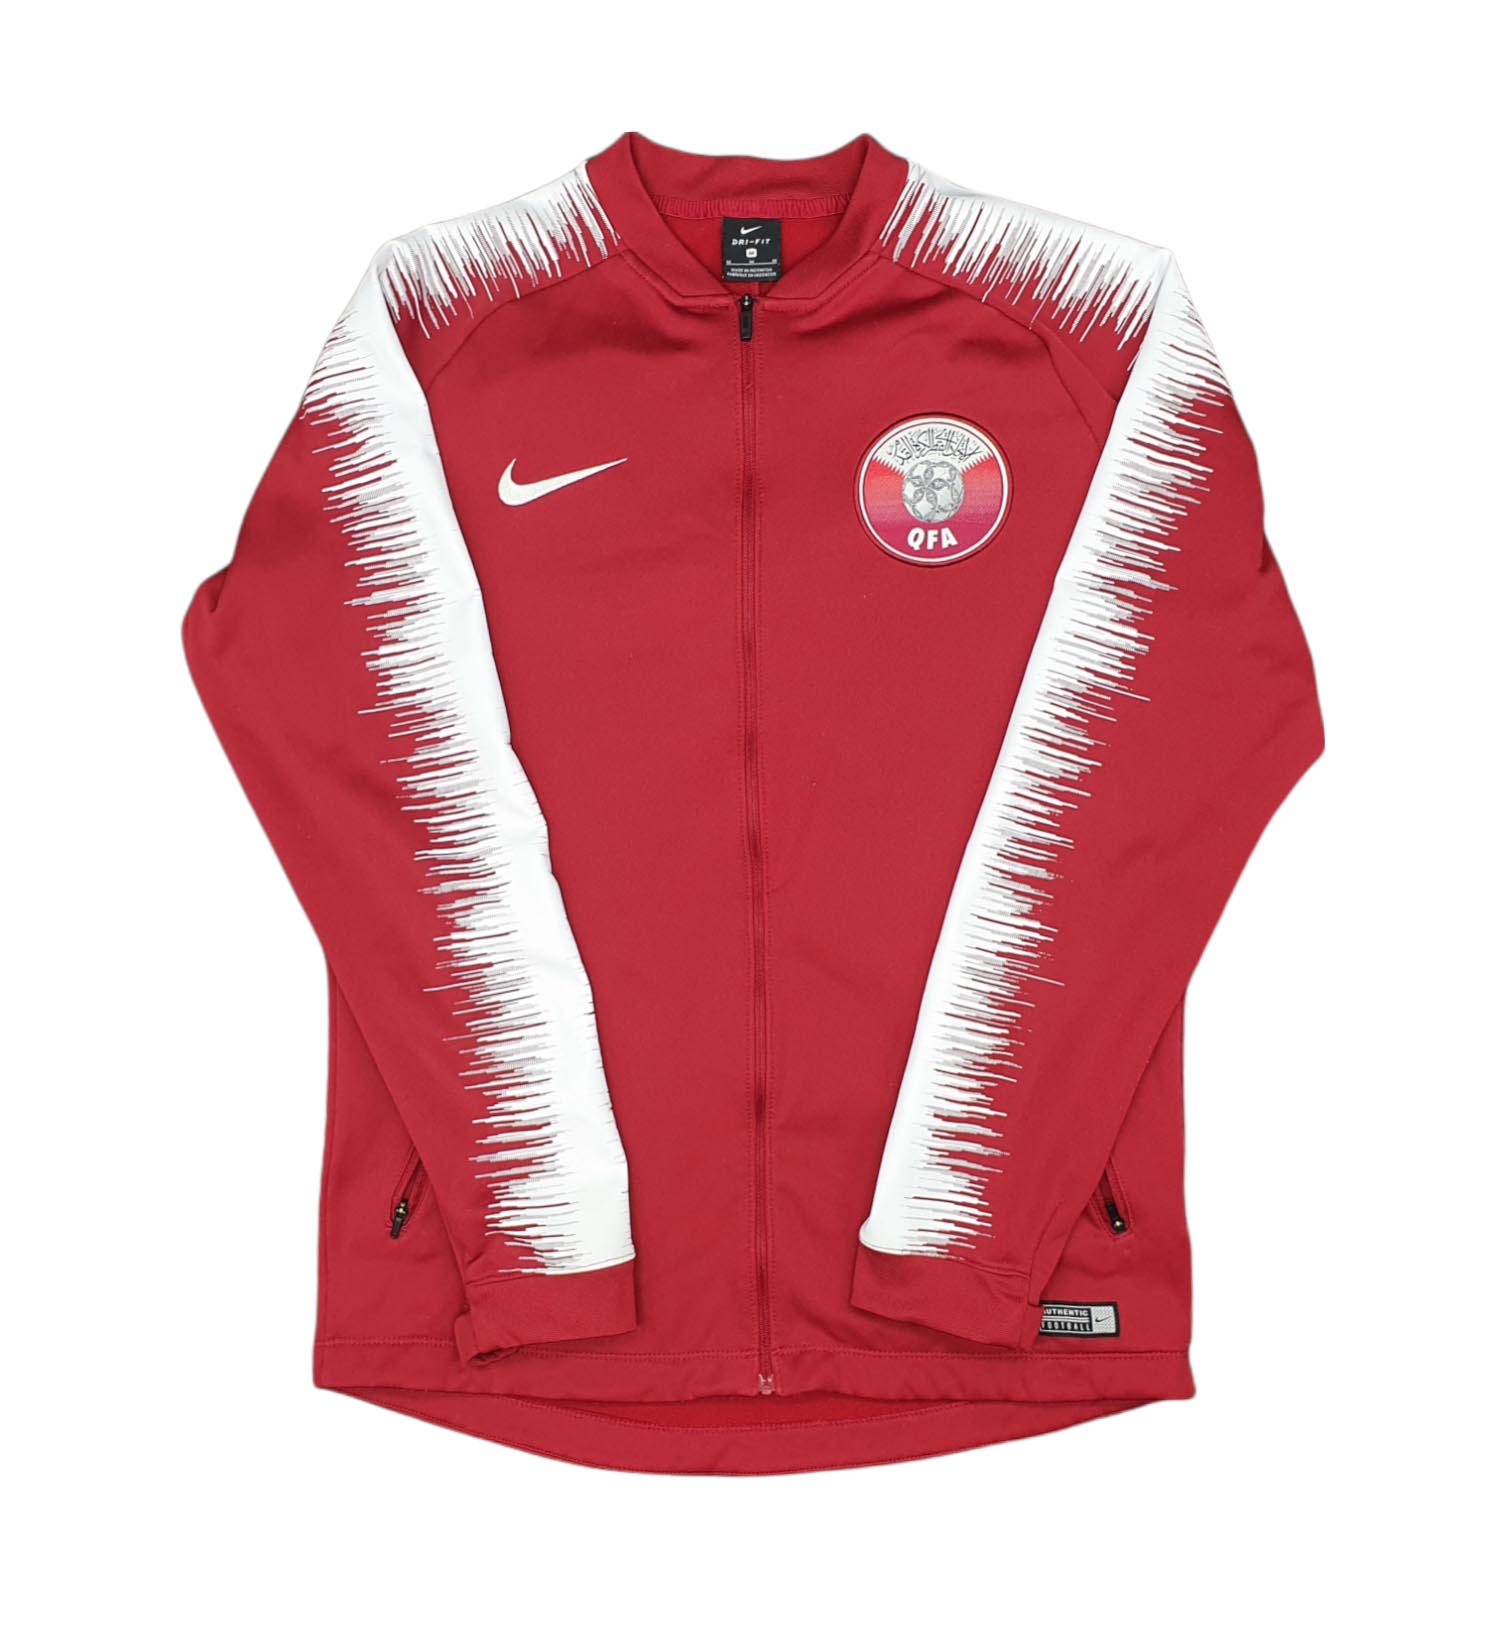 2018-19 giacca Nike training » BOLA Football Store